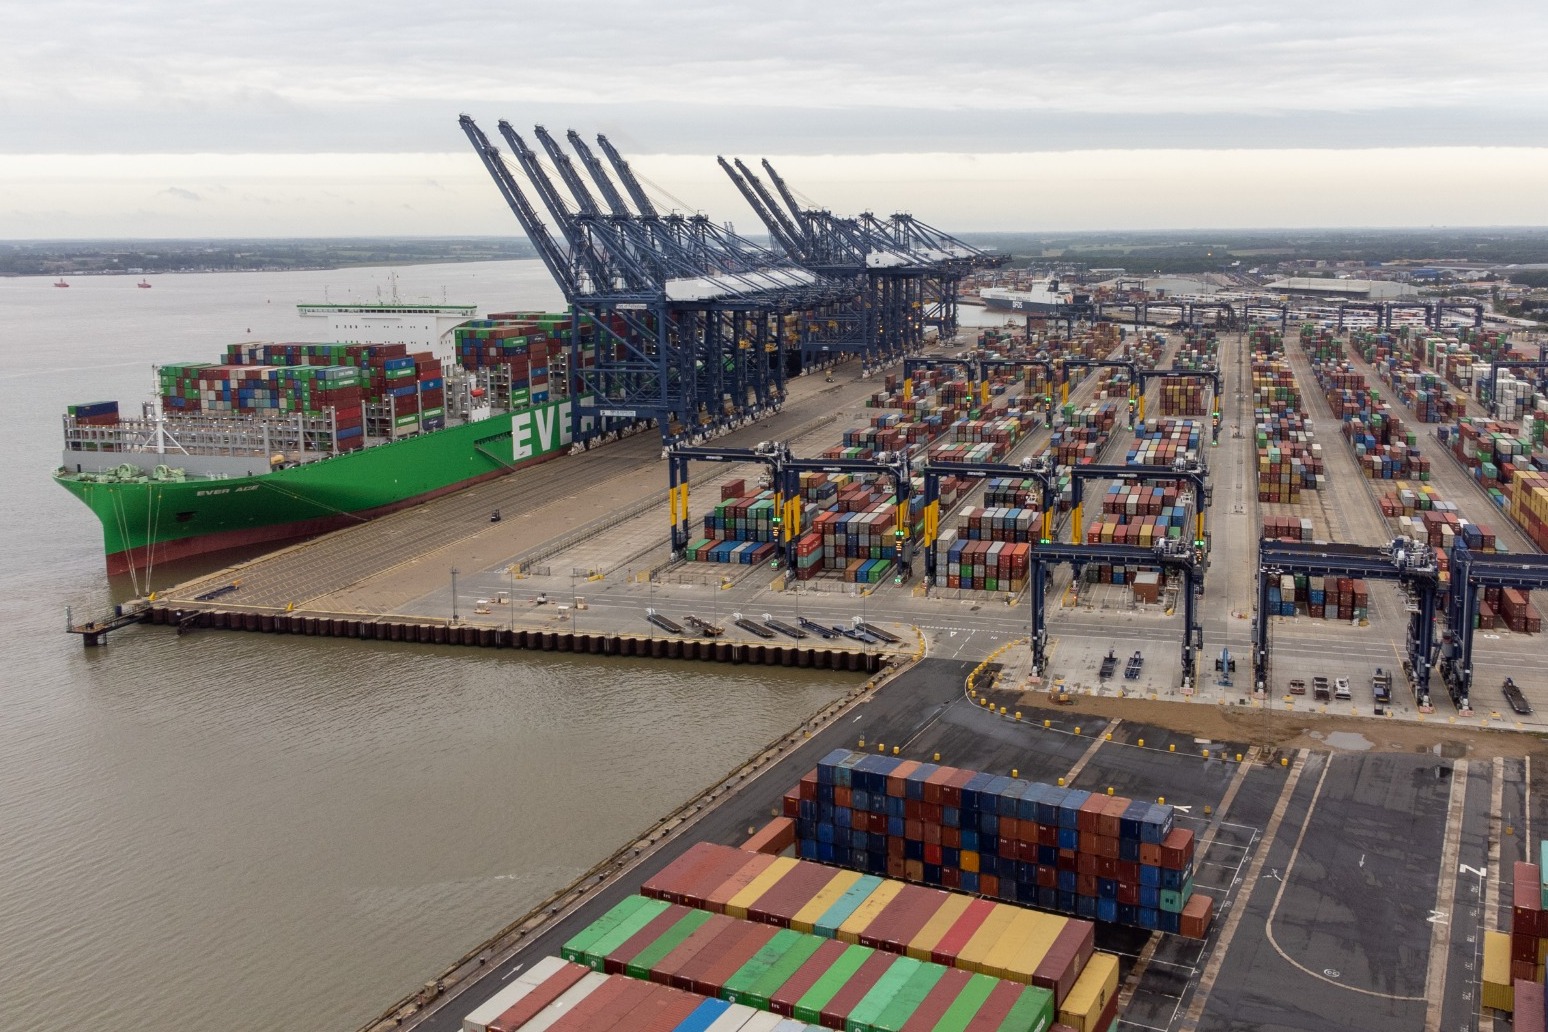 World’s largest cargo ship arrives in UK port 